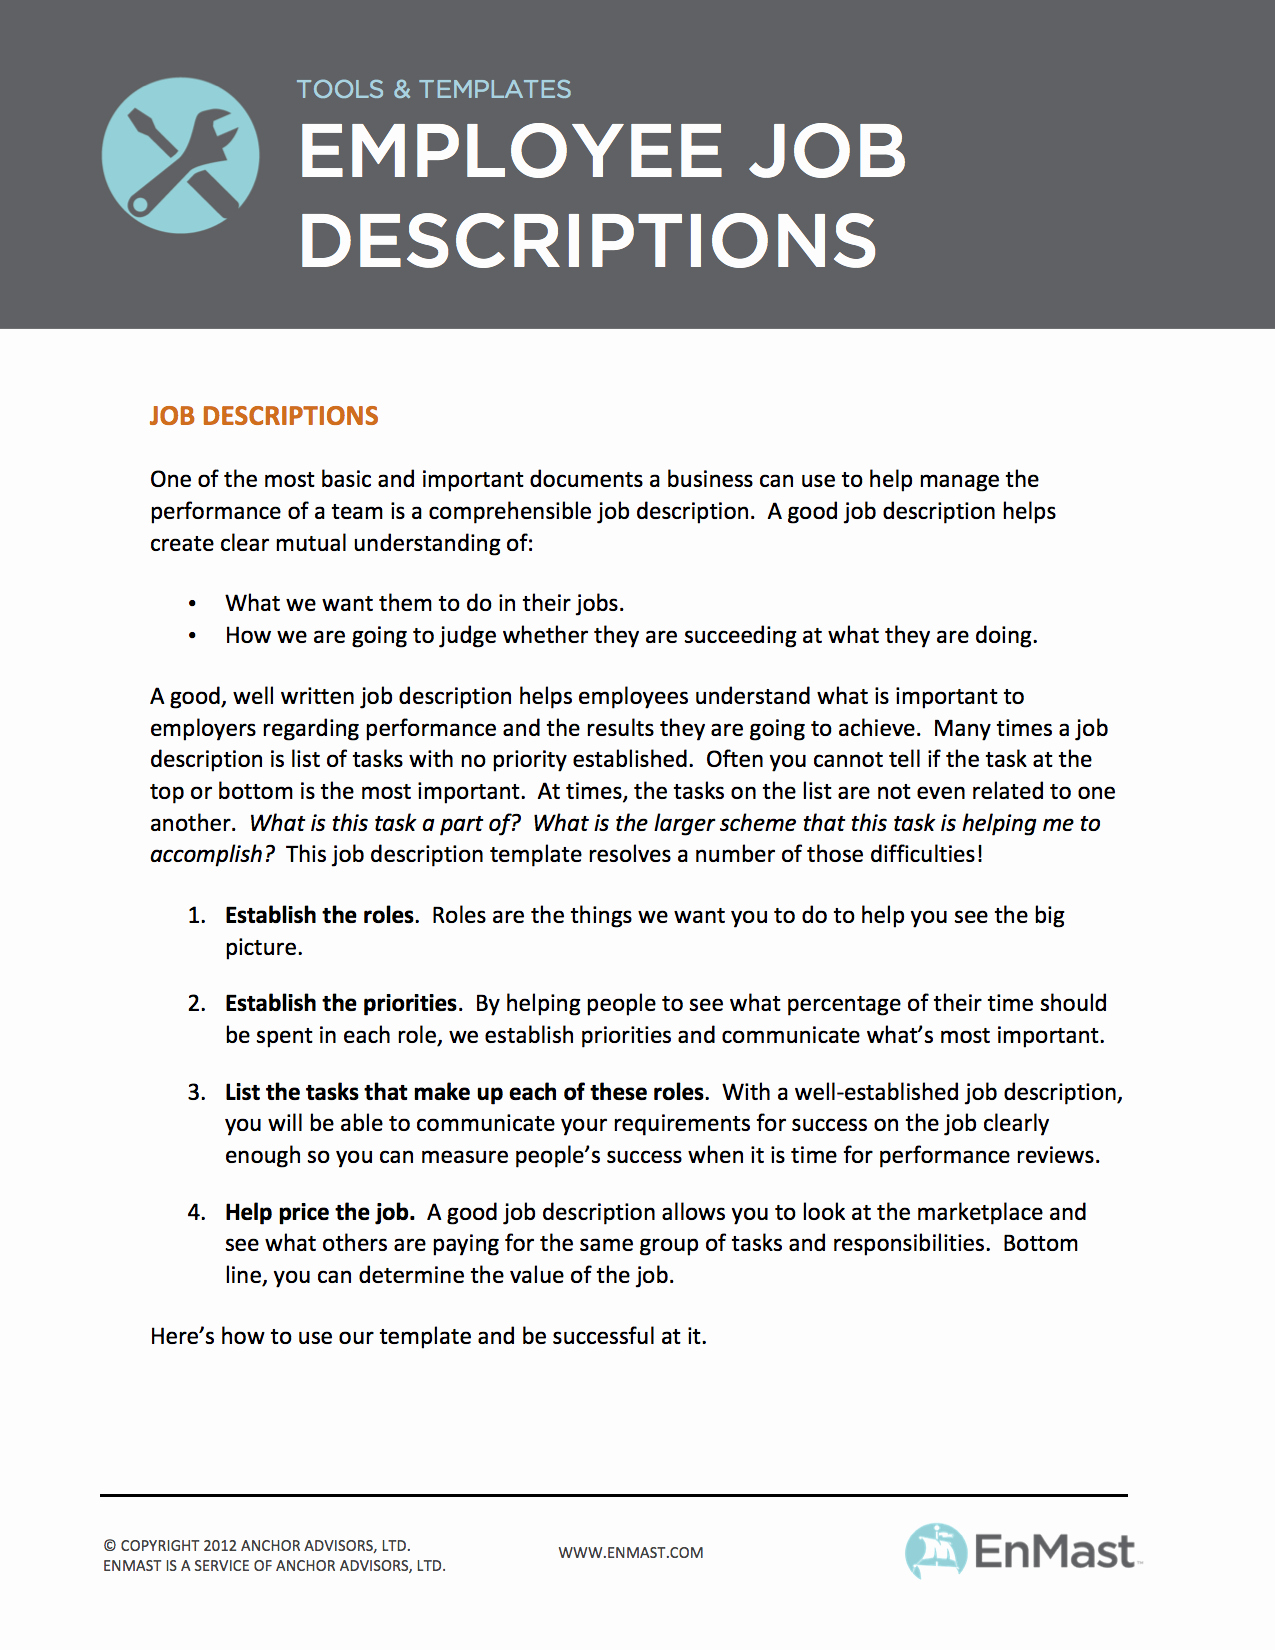 Simple Job Description Template Unique Employee Job Descriptions tool and Template